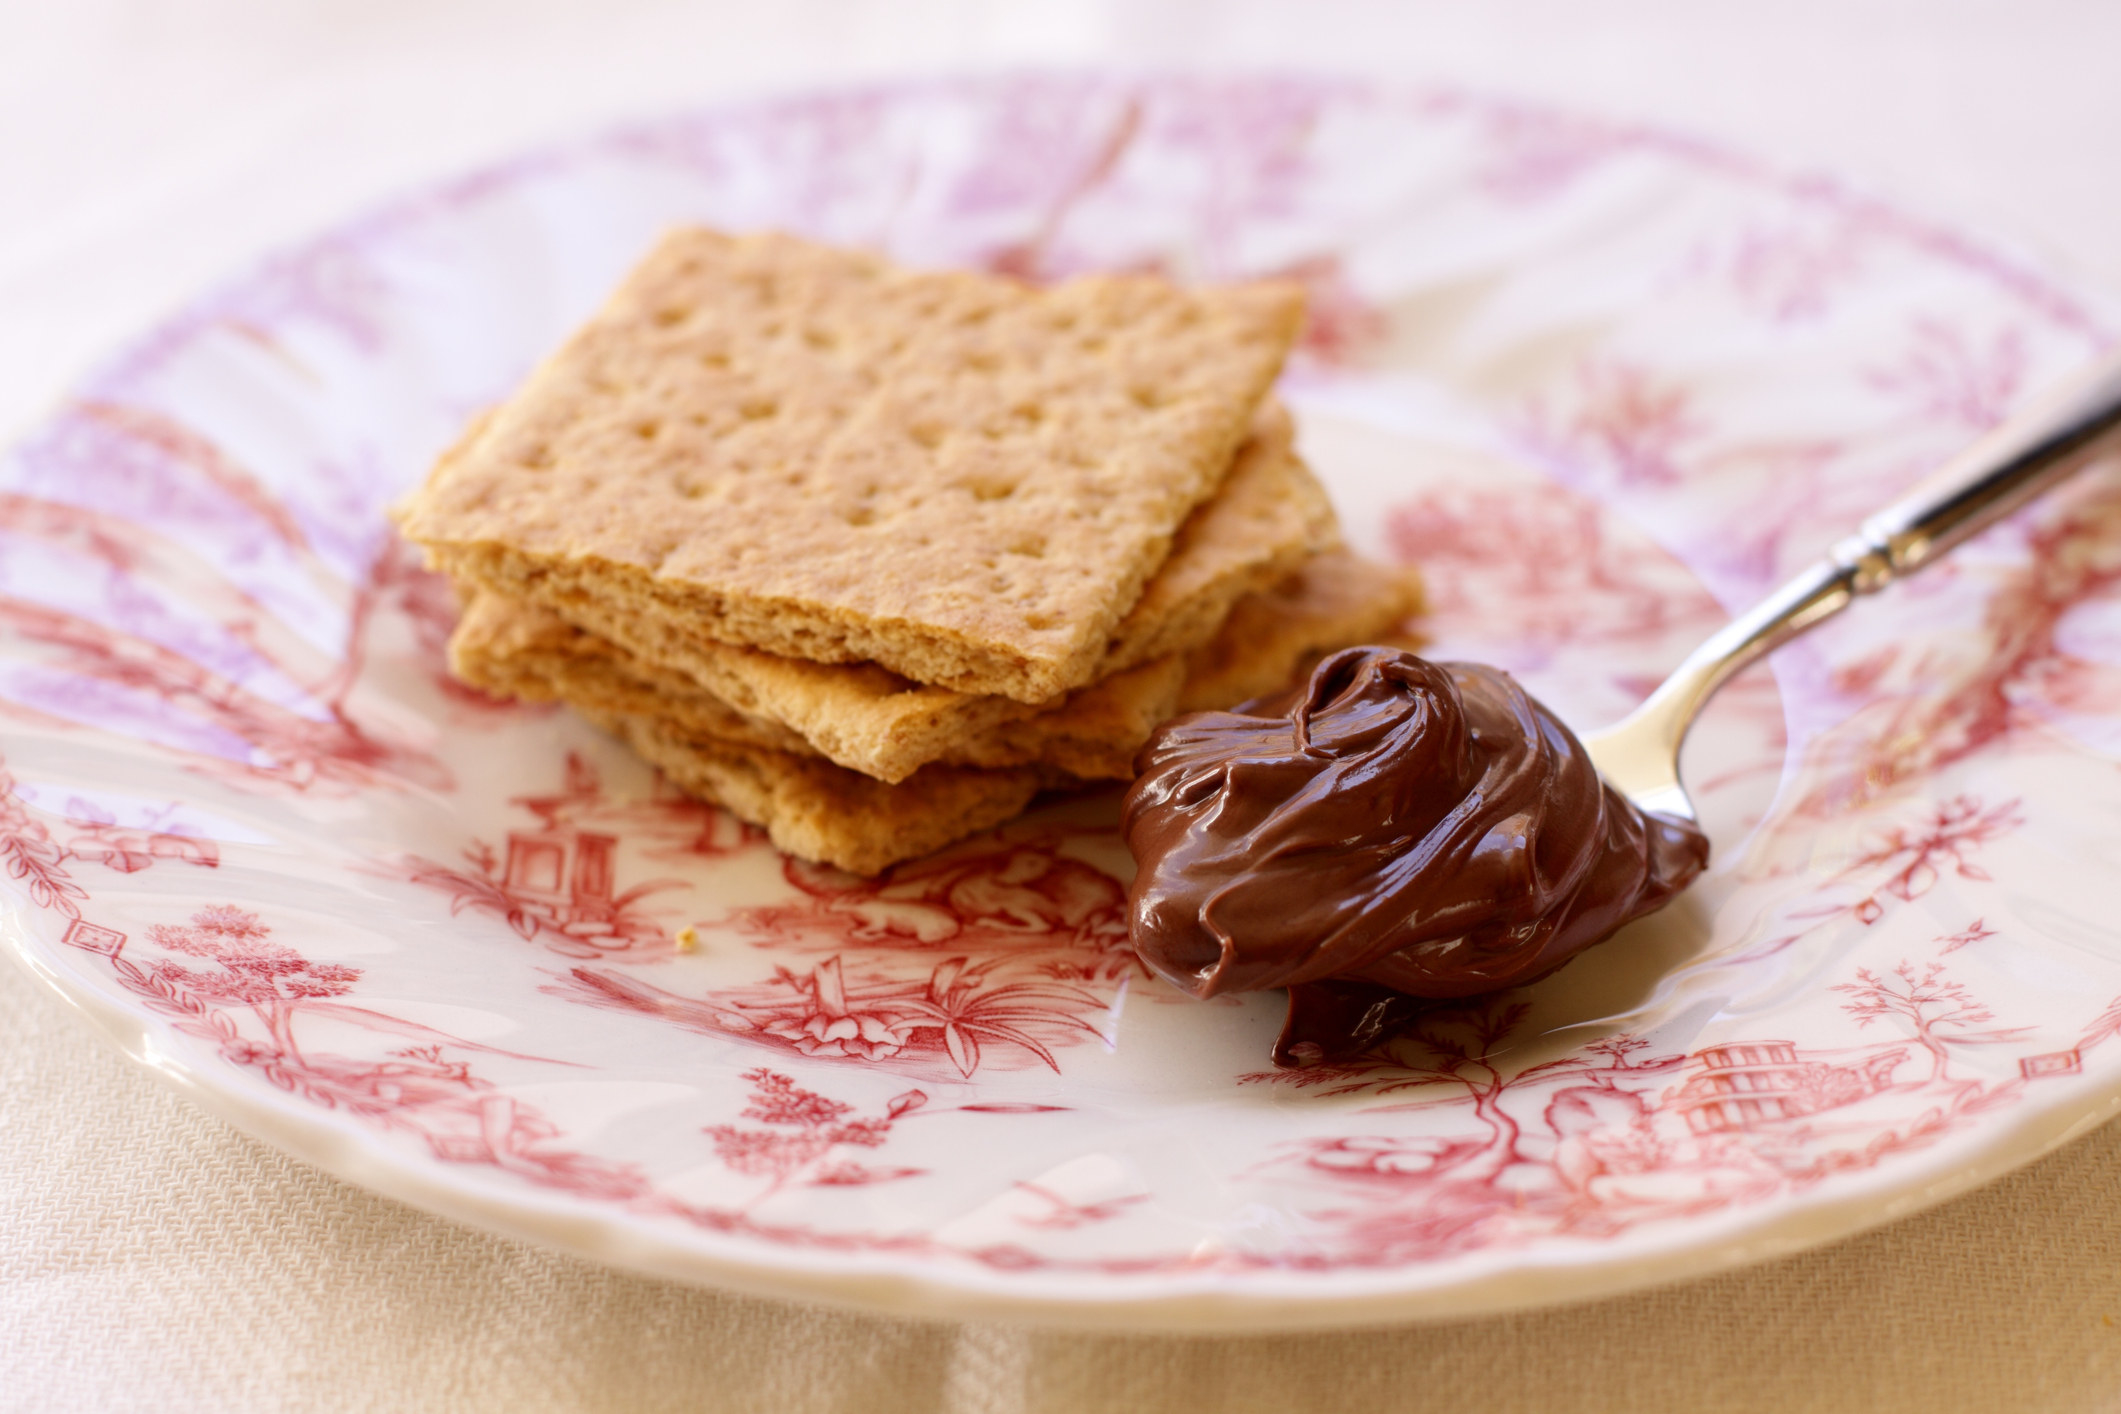 Creamy chocolate hazelnut spread on a spoon with graham crackers.